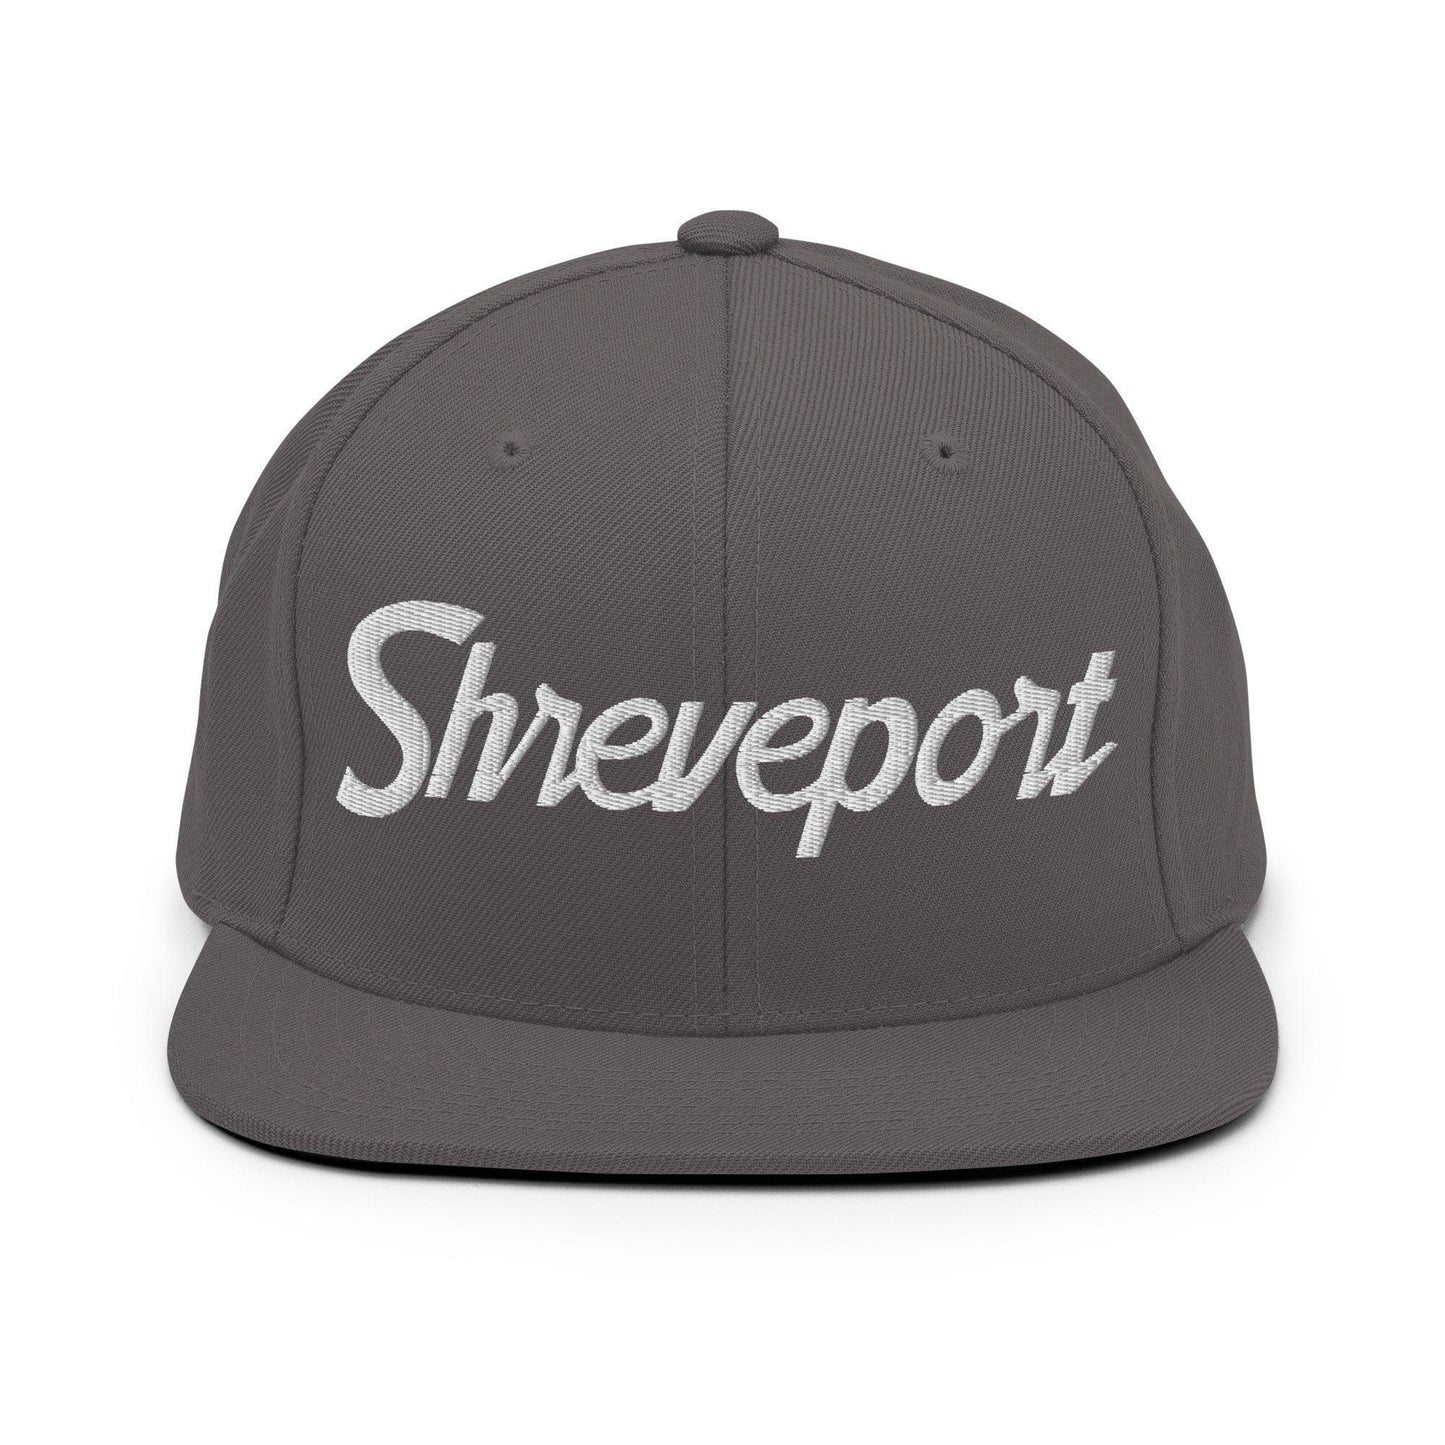 Shreveport Script Snapback Hat Dark Grey